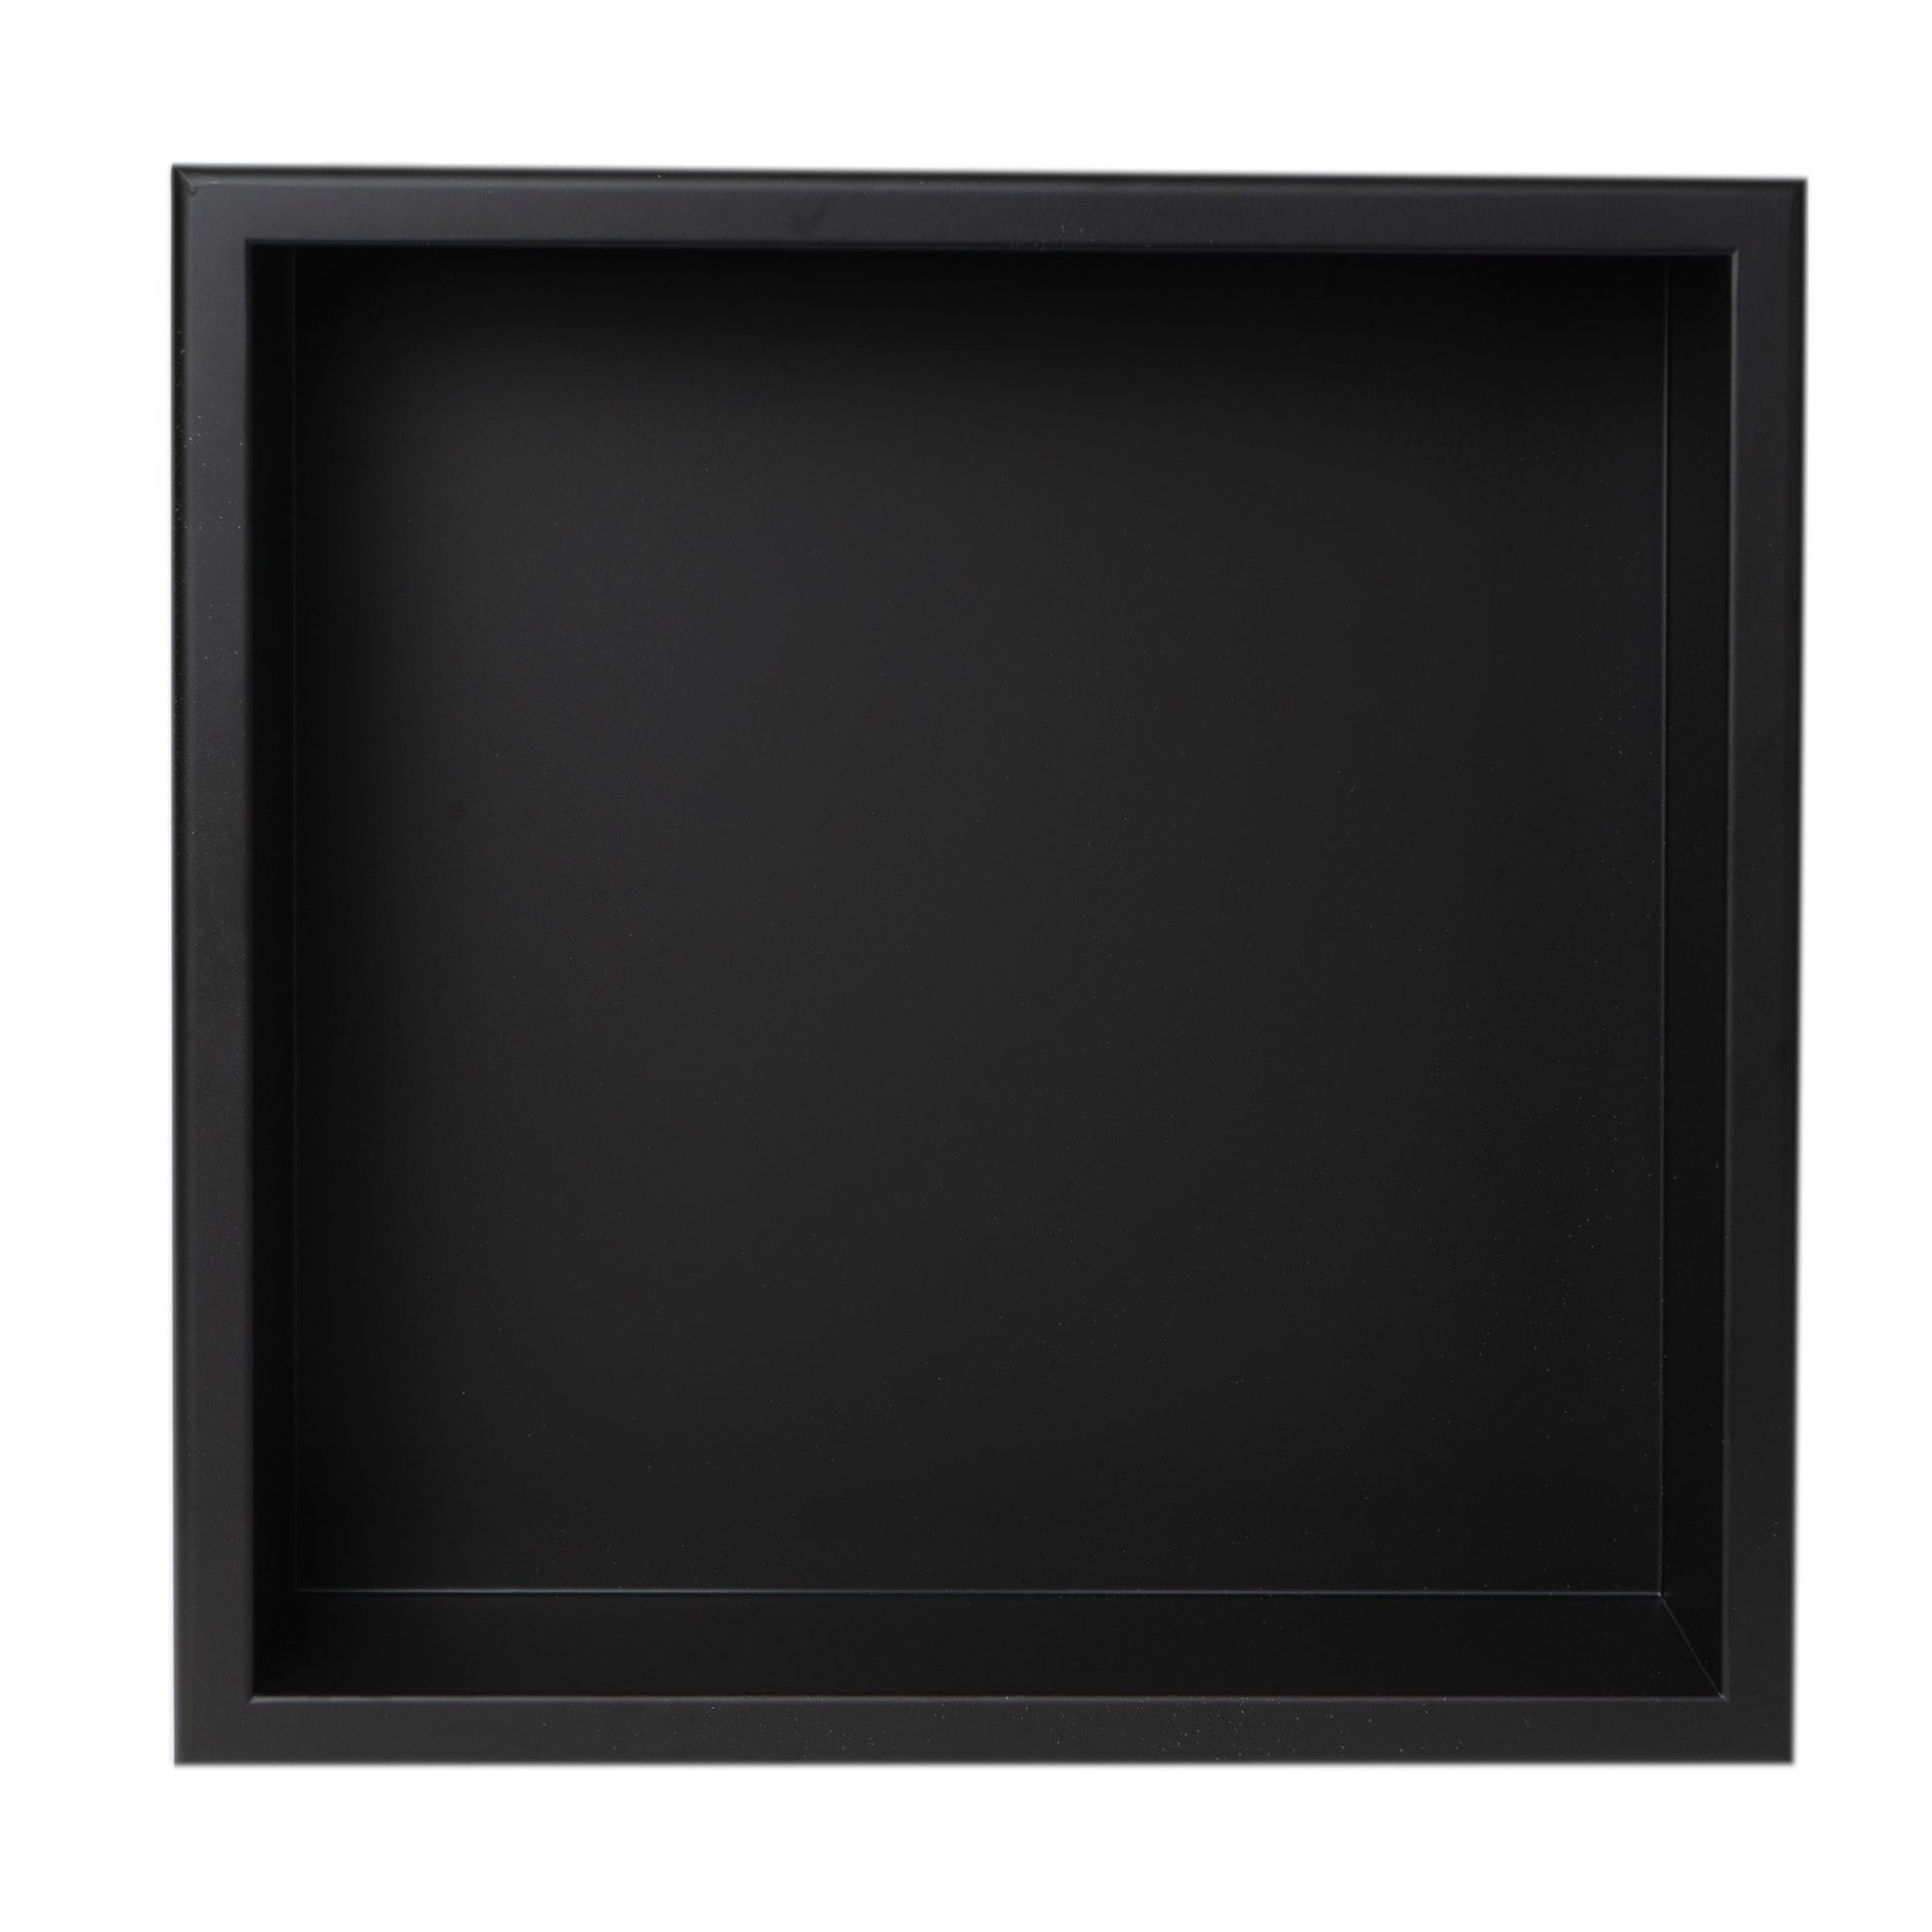 ALFI Brand ABNC1616-BLA 16" Black Matte Stainless Steel Square Single Shelf Bath Shower Niche